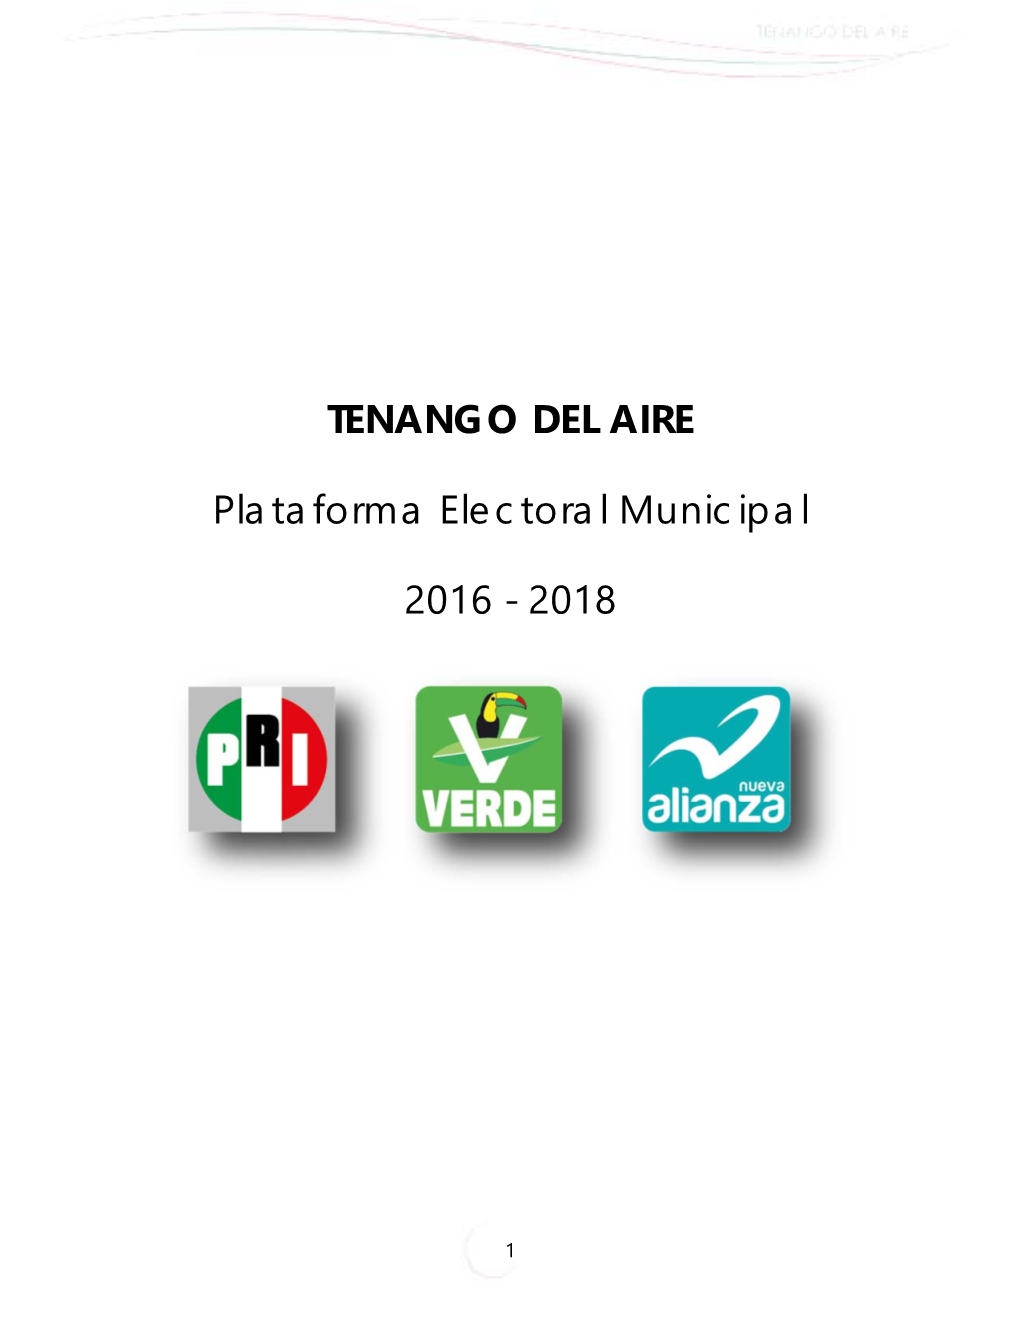 TENANGO DEL AIRE Plataforma Electoral Municipal 2016